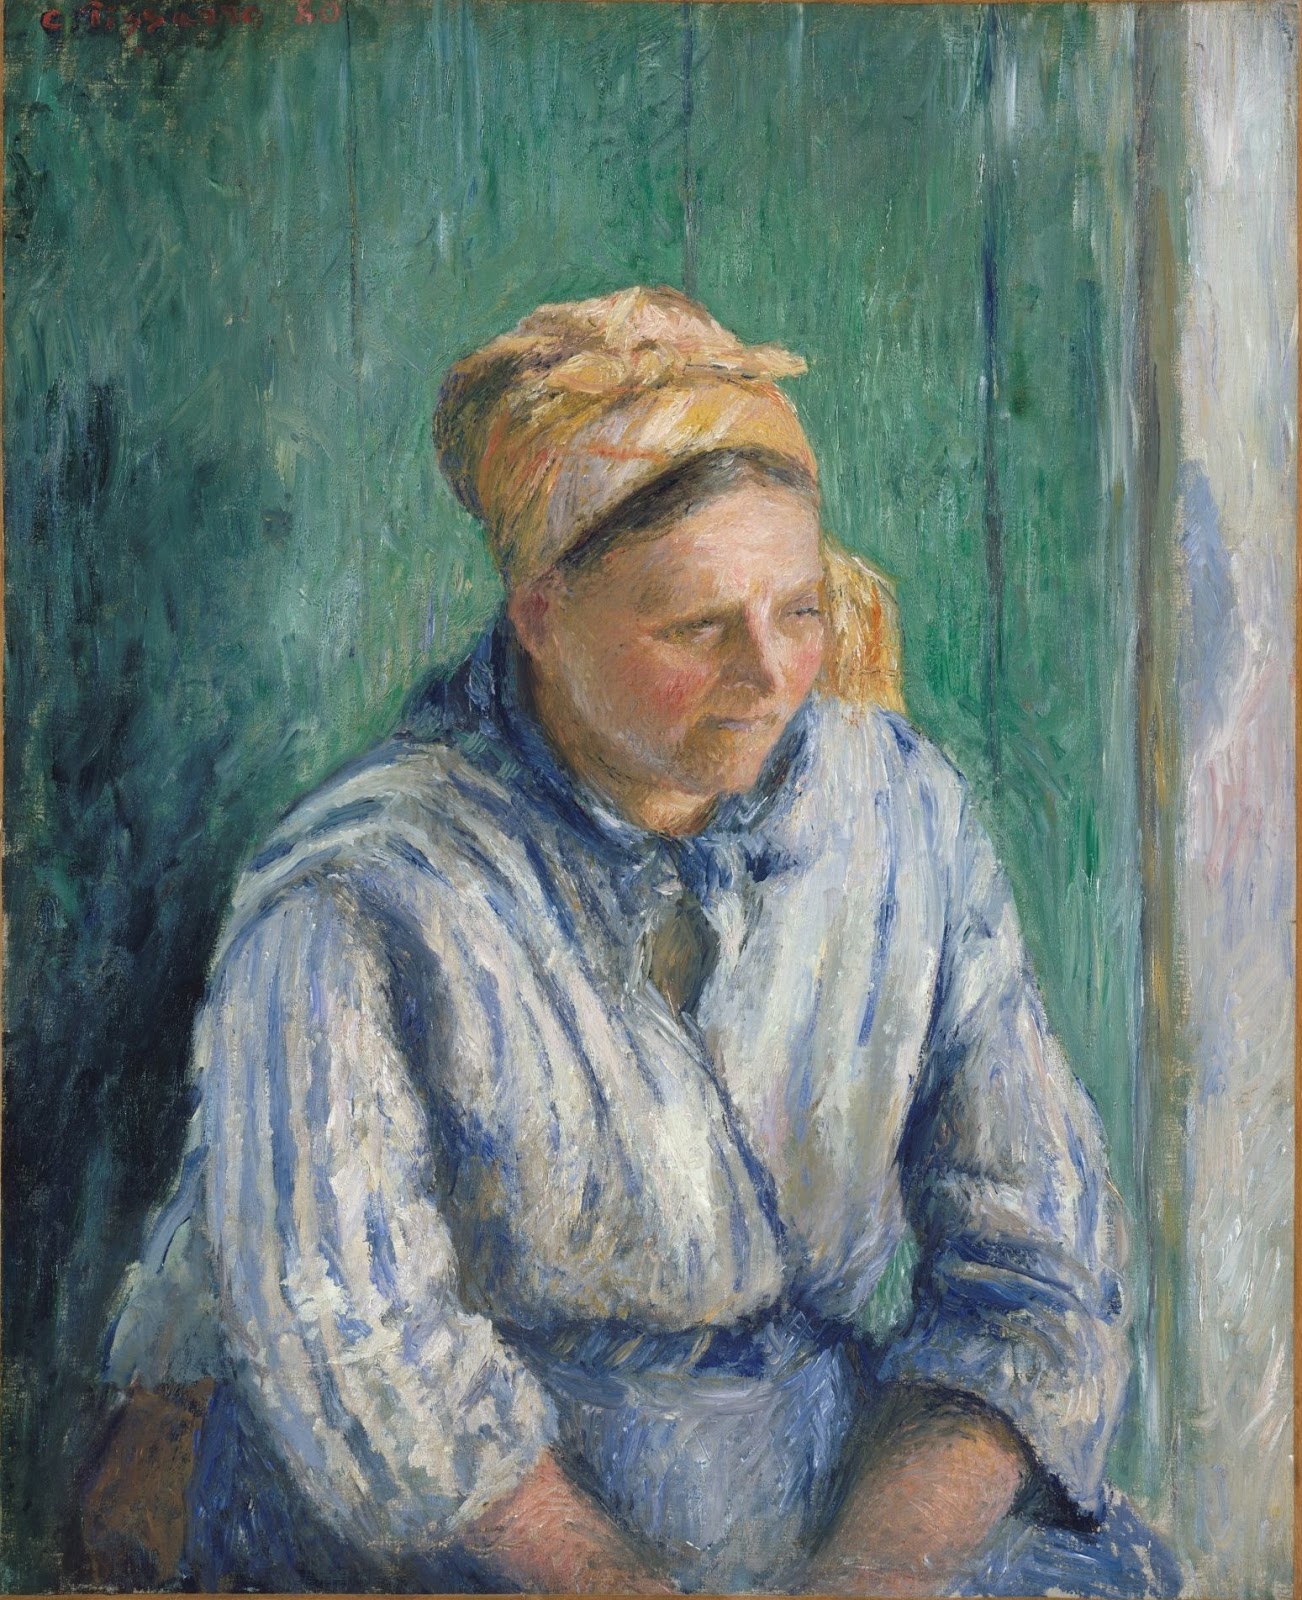 Camille+Pissarro-1830-1903 (373).jpg